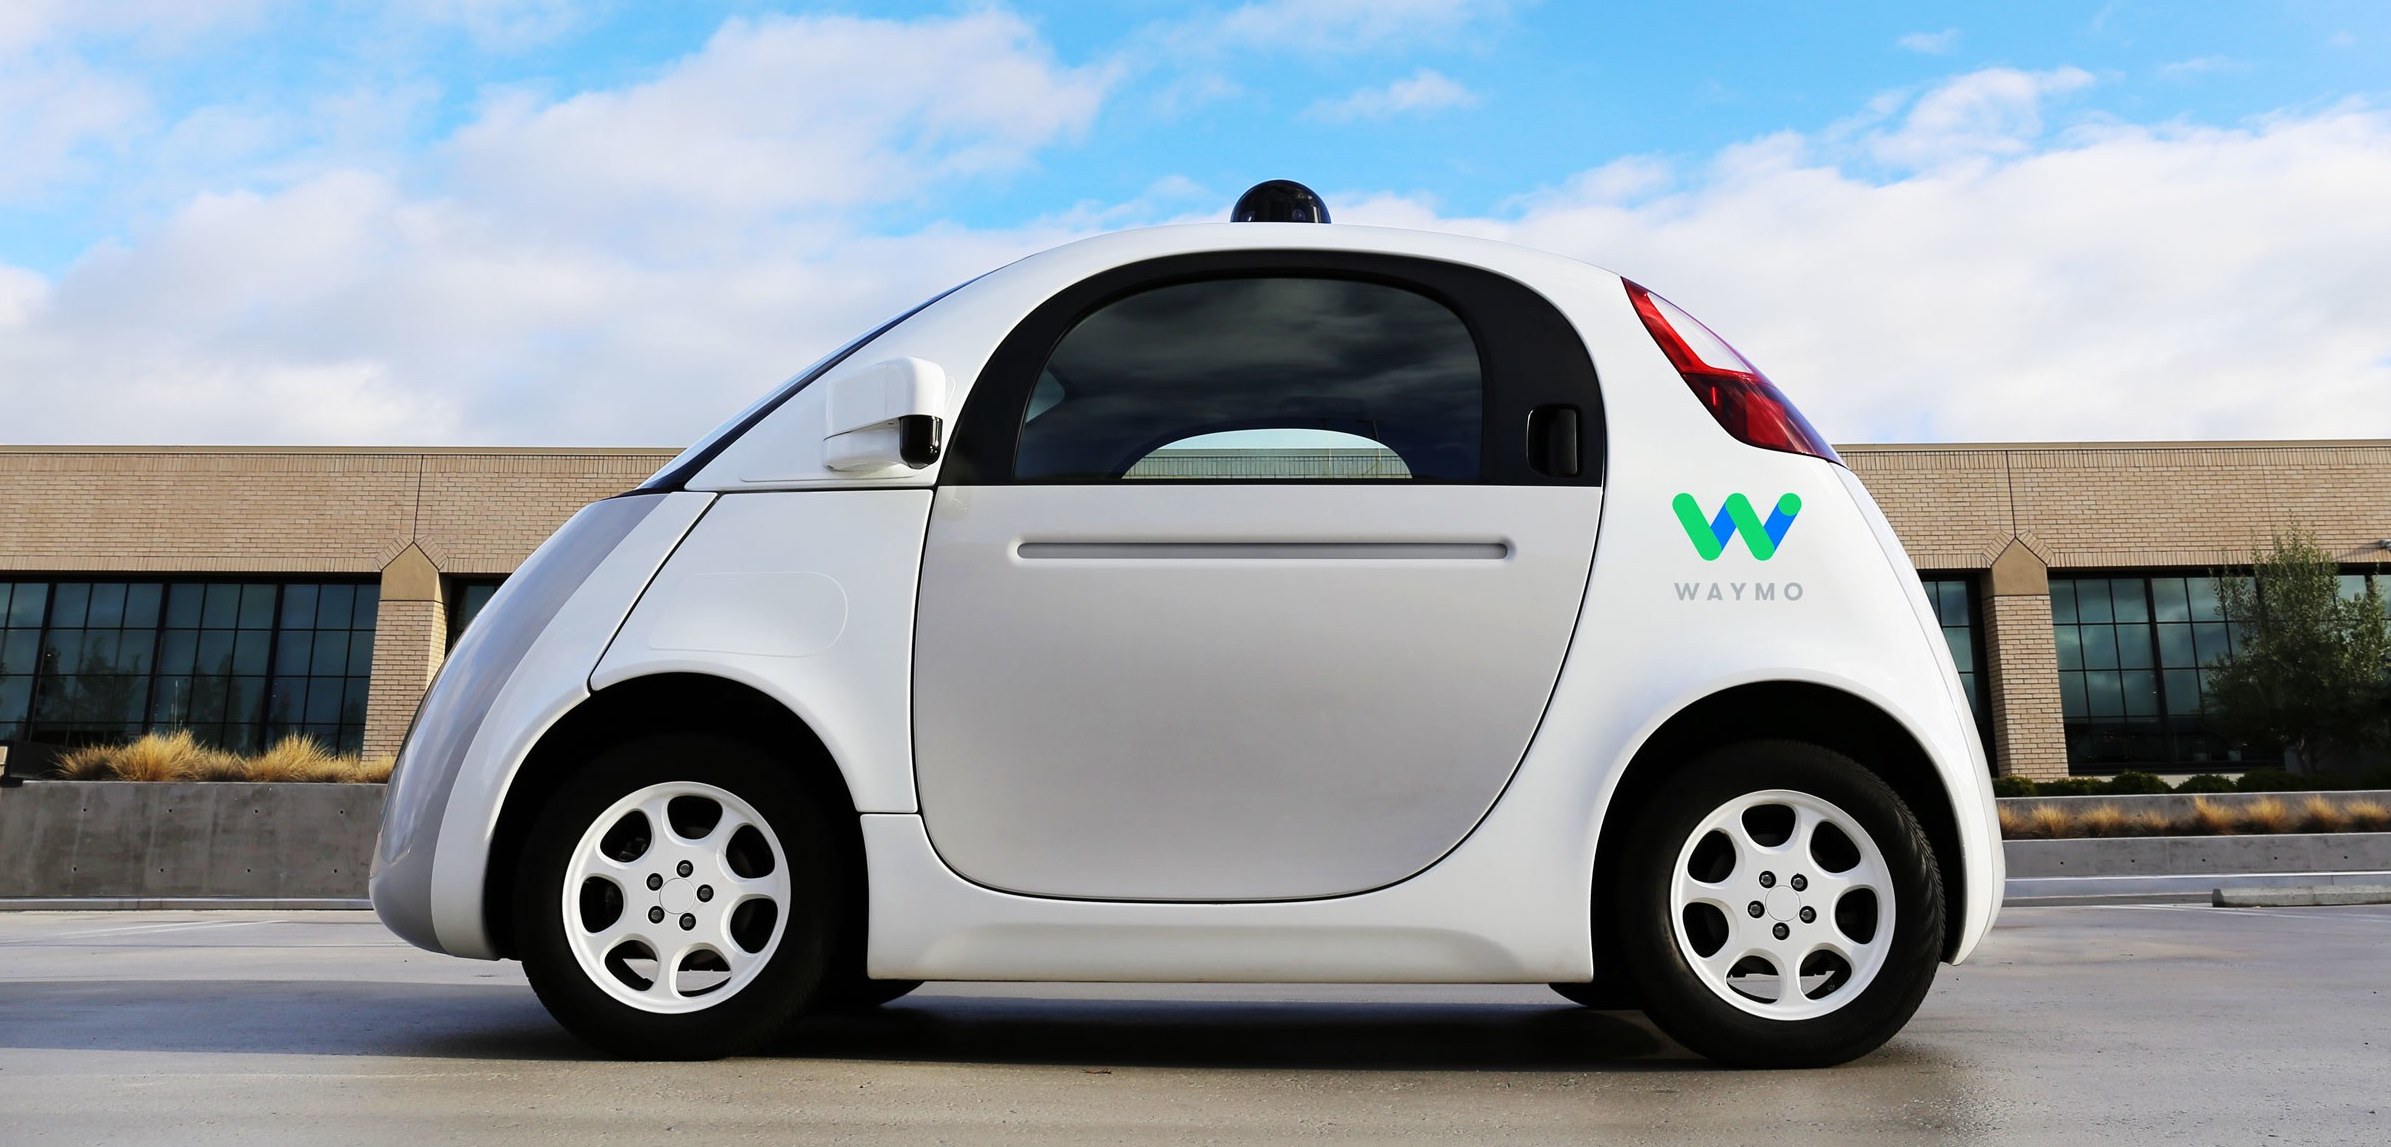 Edge Technology Vital to Autonomous Vehicle Future